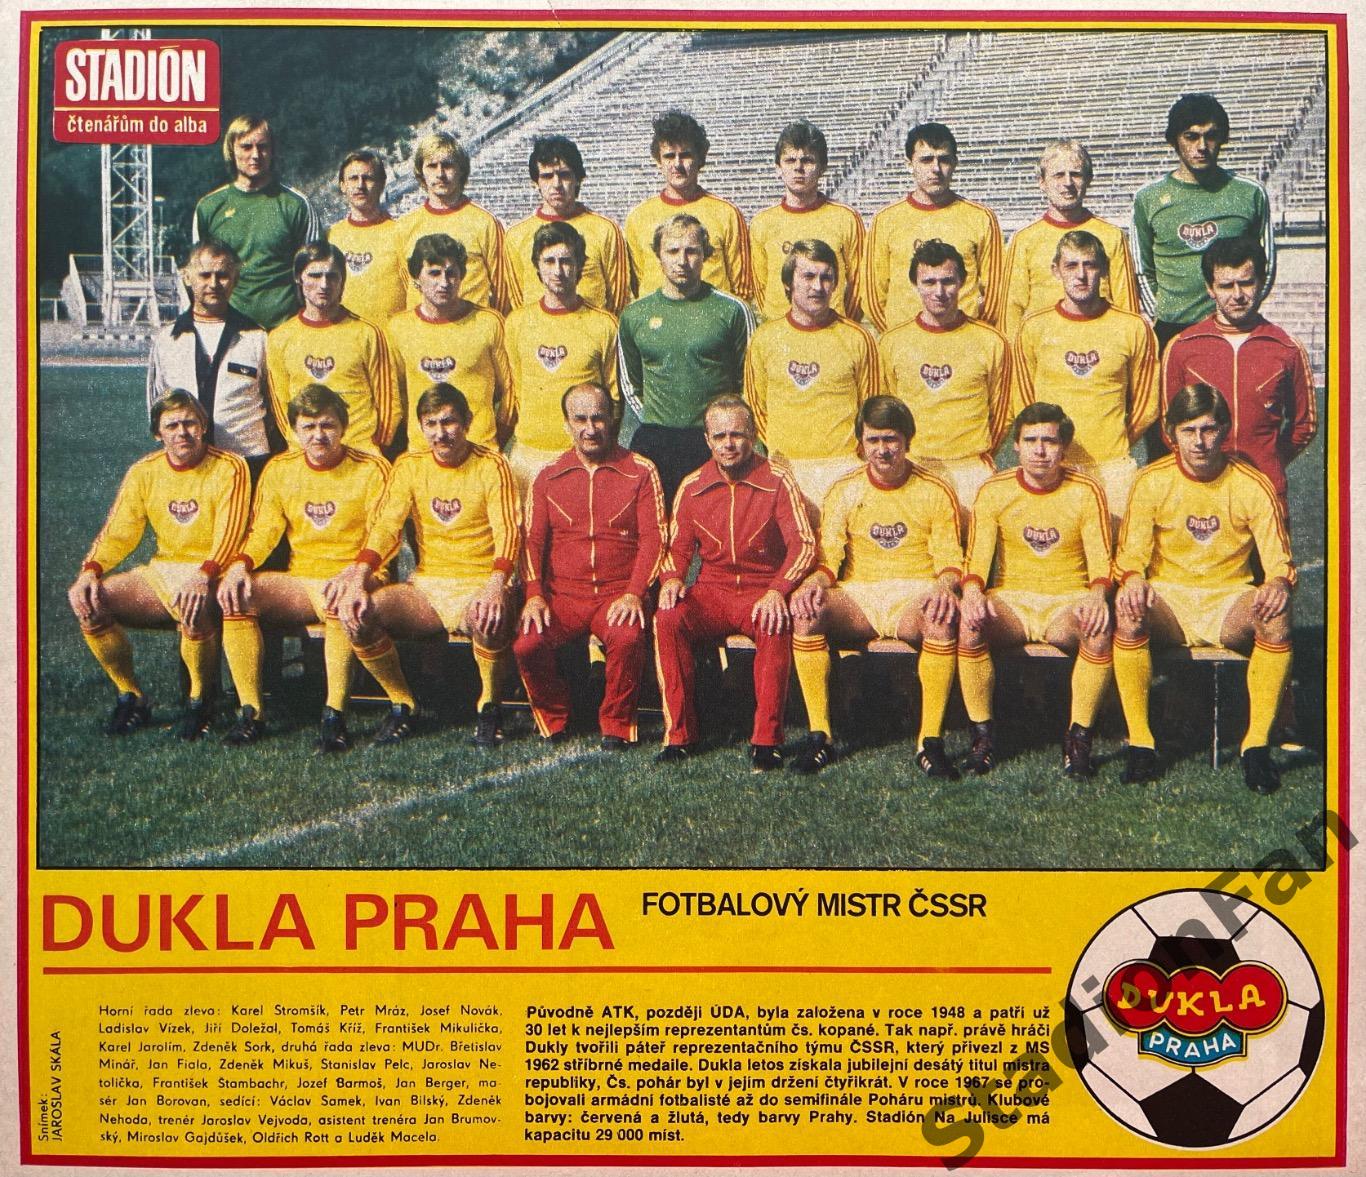 Постер из журнала Stadion (Стадион) -Dukla Praha,1979.